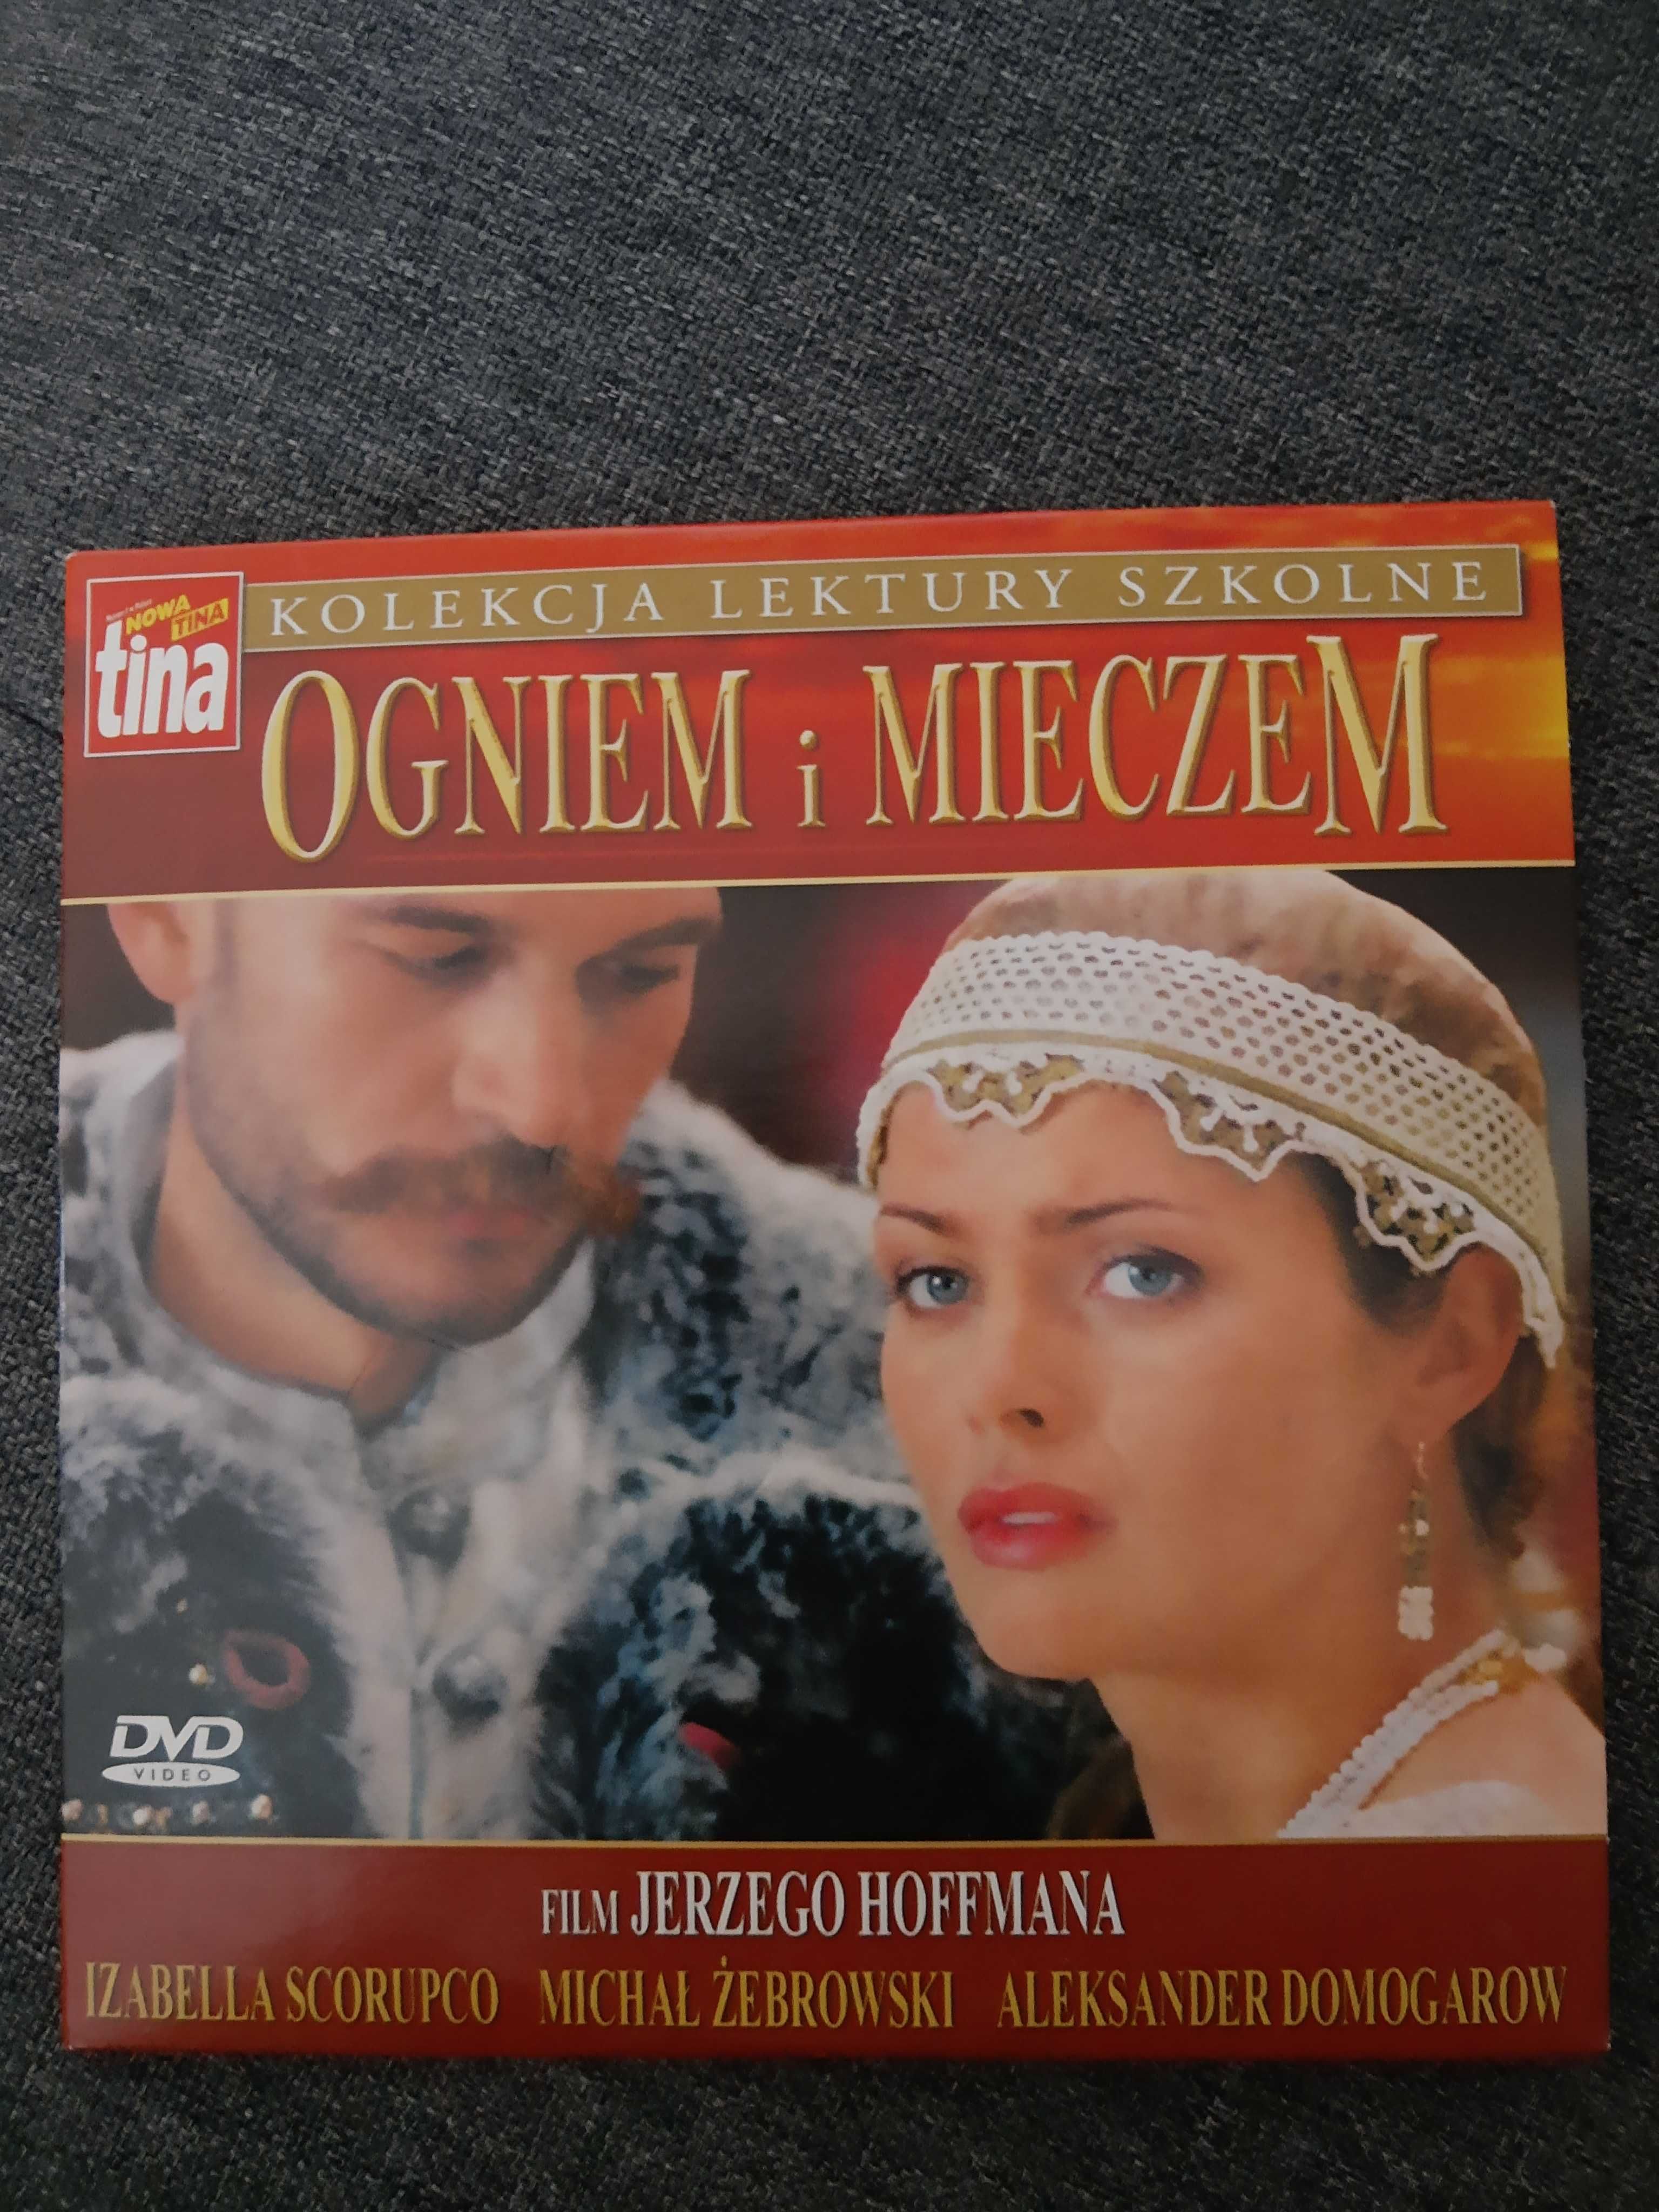 DVD film Ogniem i mieczem. Lektura  Scorupco, Żebrowski.